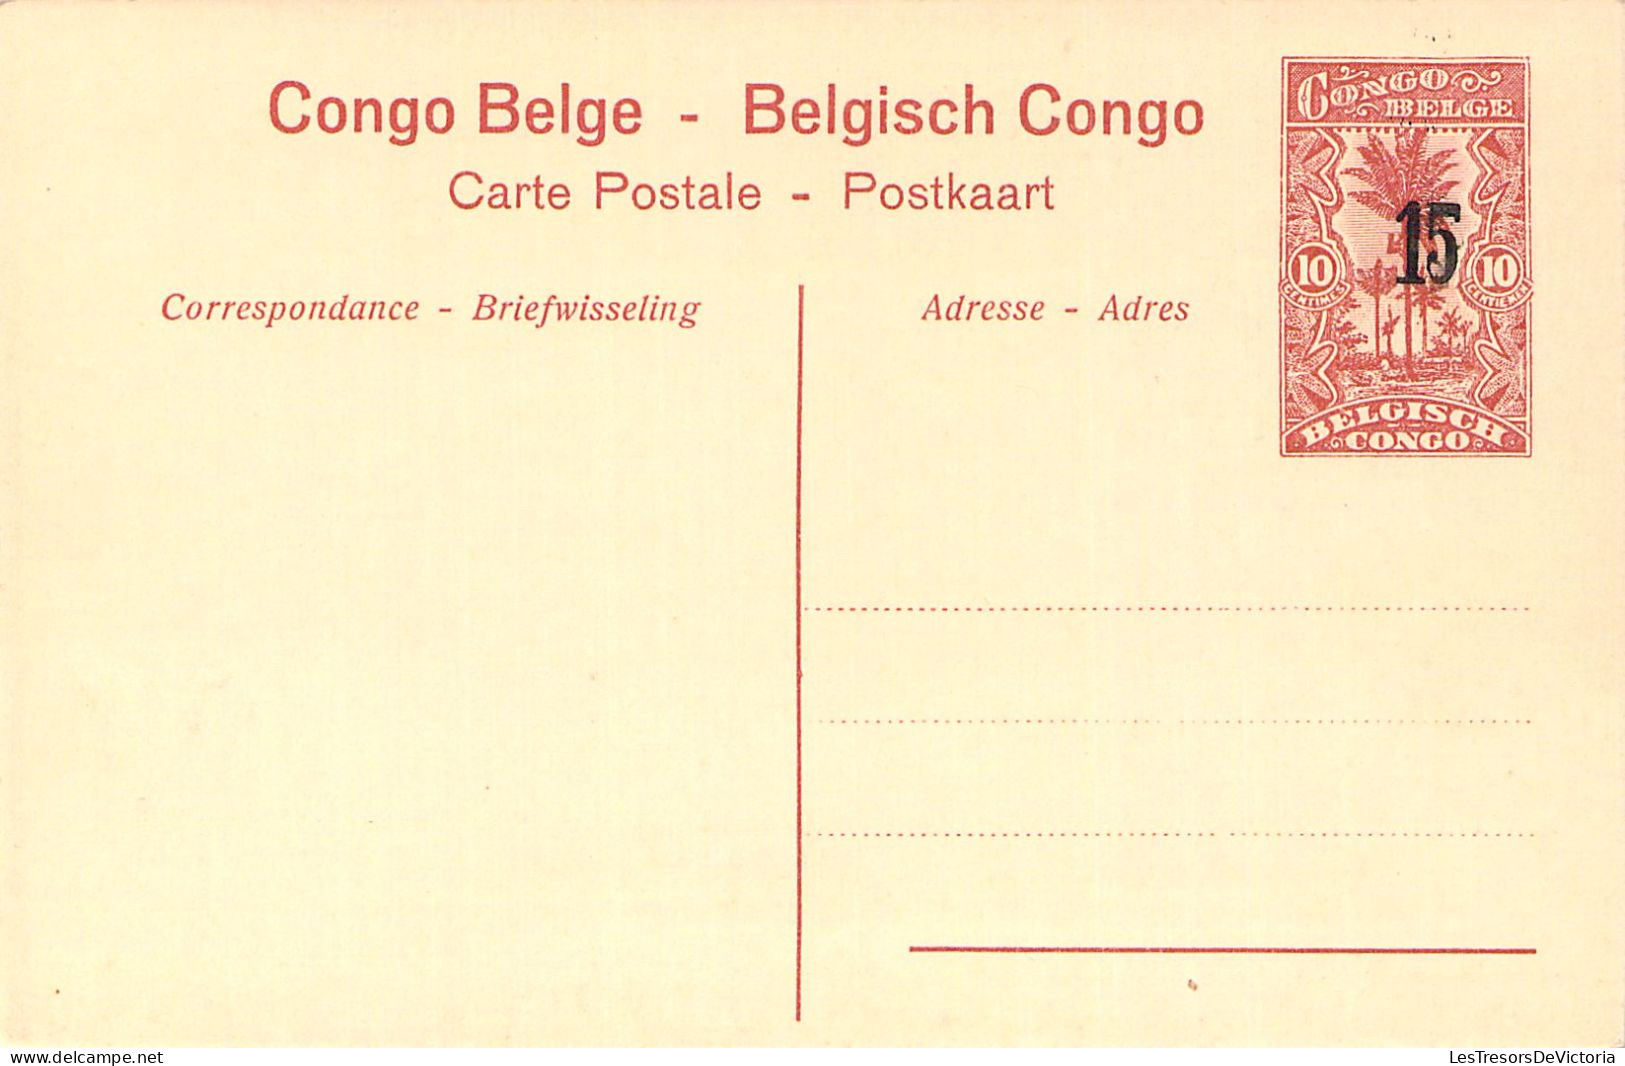 CONGO BELGE - Emballage De Poisson Sec Dans Le Mayumbe - Carte Postale Ancienne - Belgian Congo